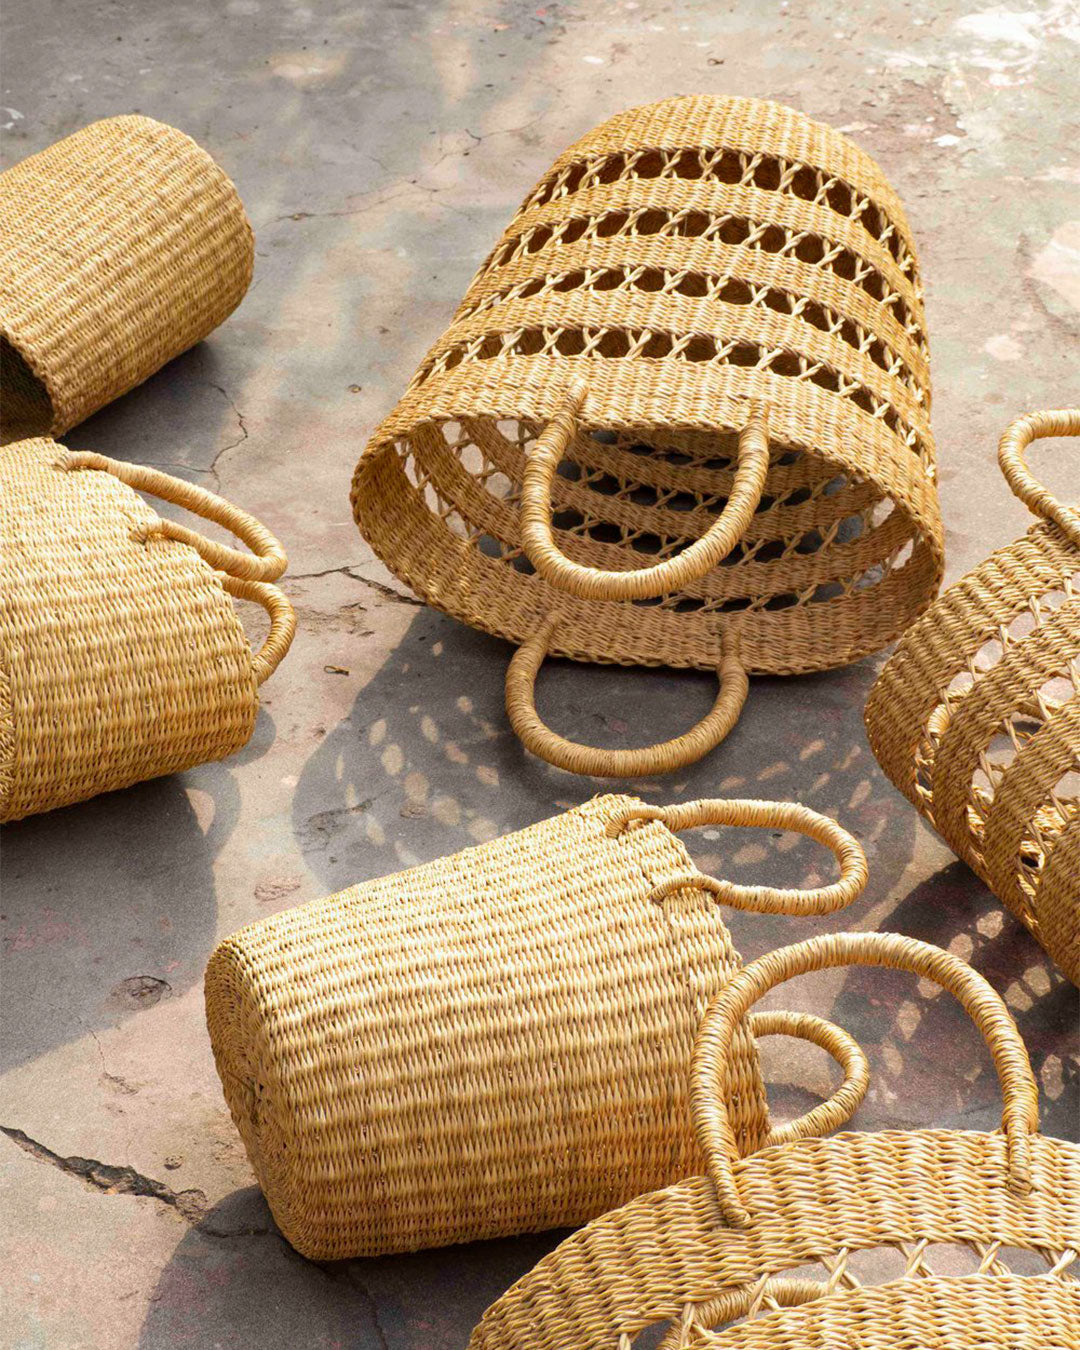 Tena Basket Hand-woven Aketekete